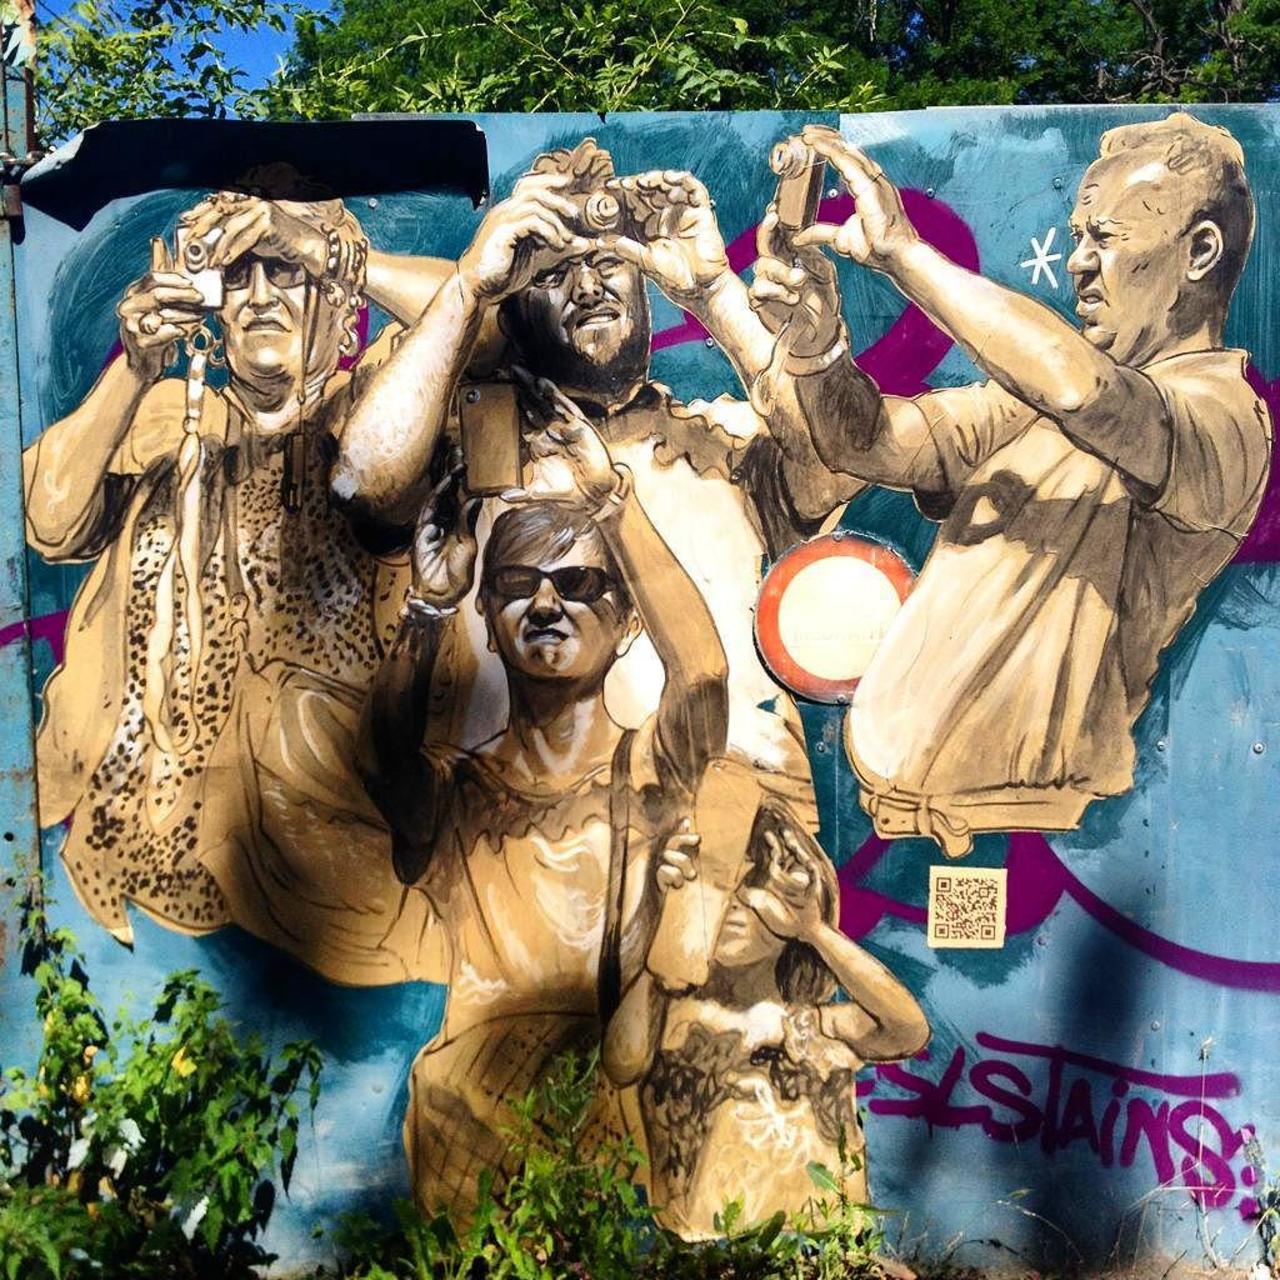 #Paris #graffiti photo by @ceky_art http://ift.tt/1jWRcJs #StreetArt http://t.co/7h5XcDcAPc